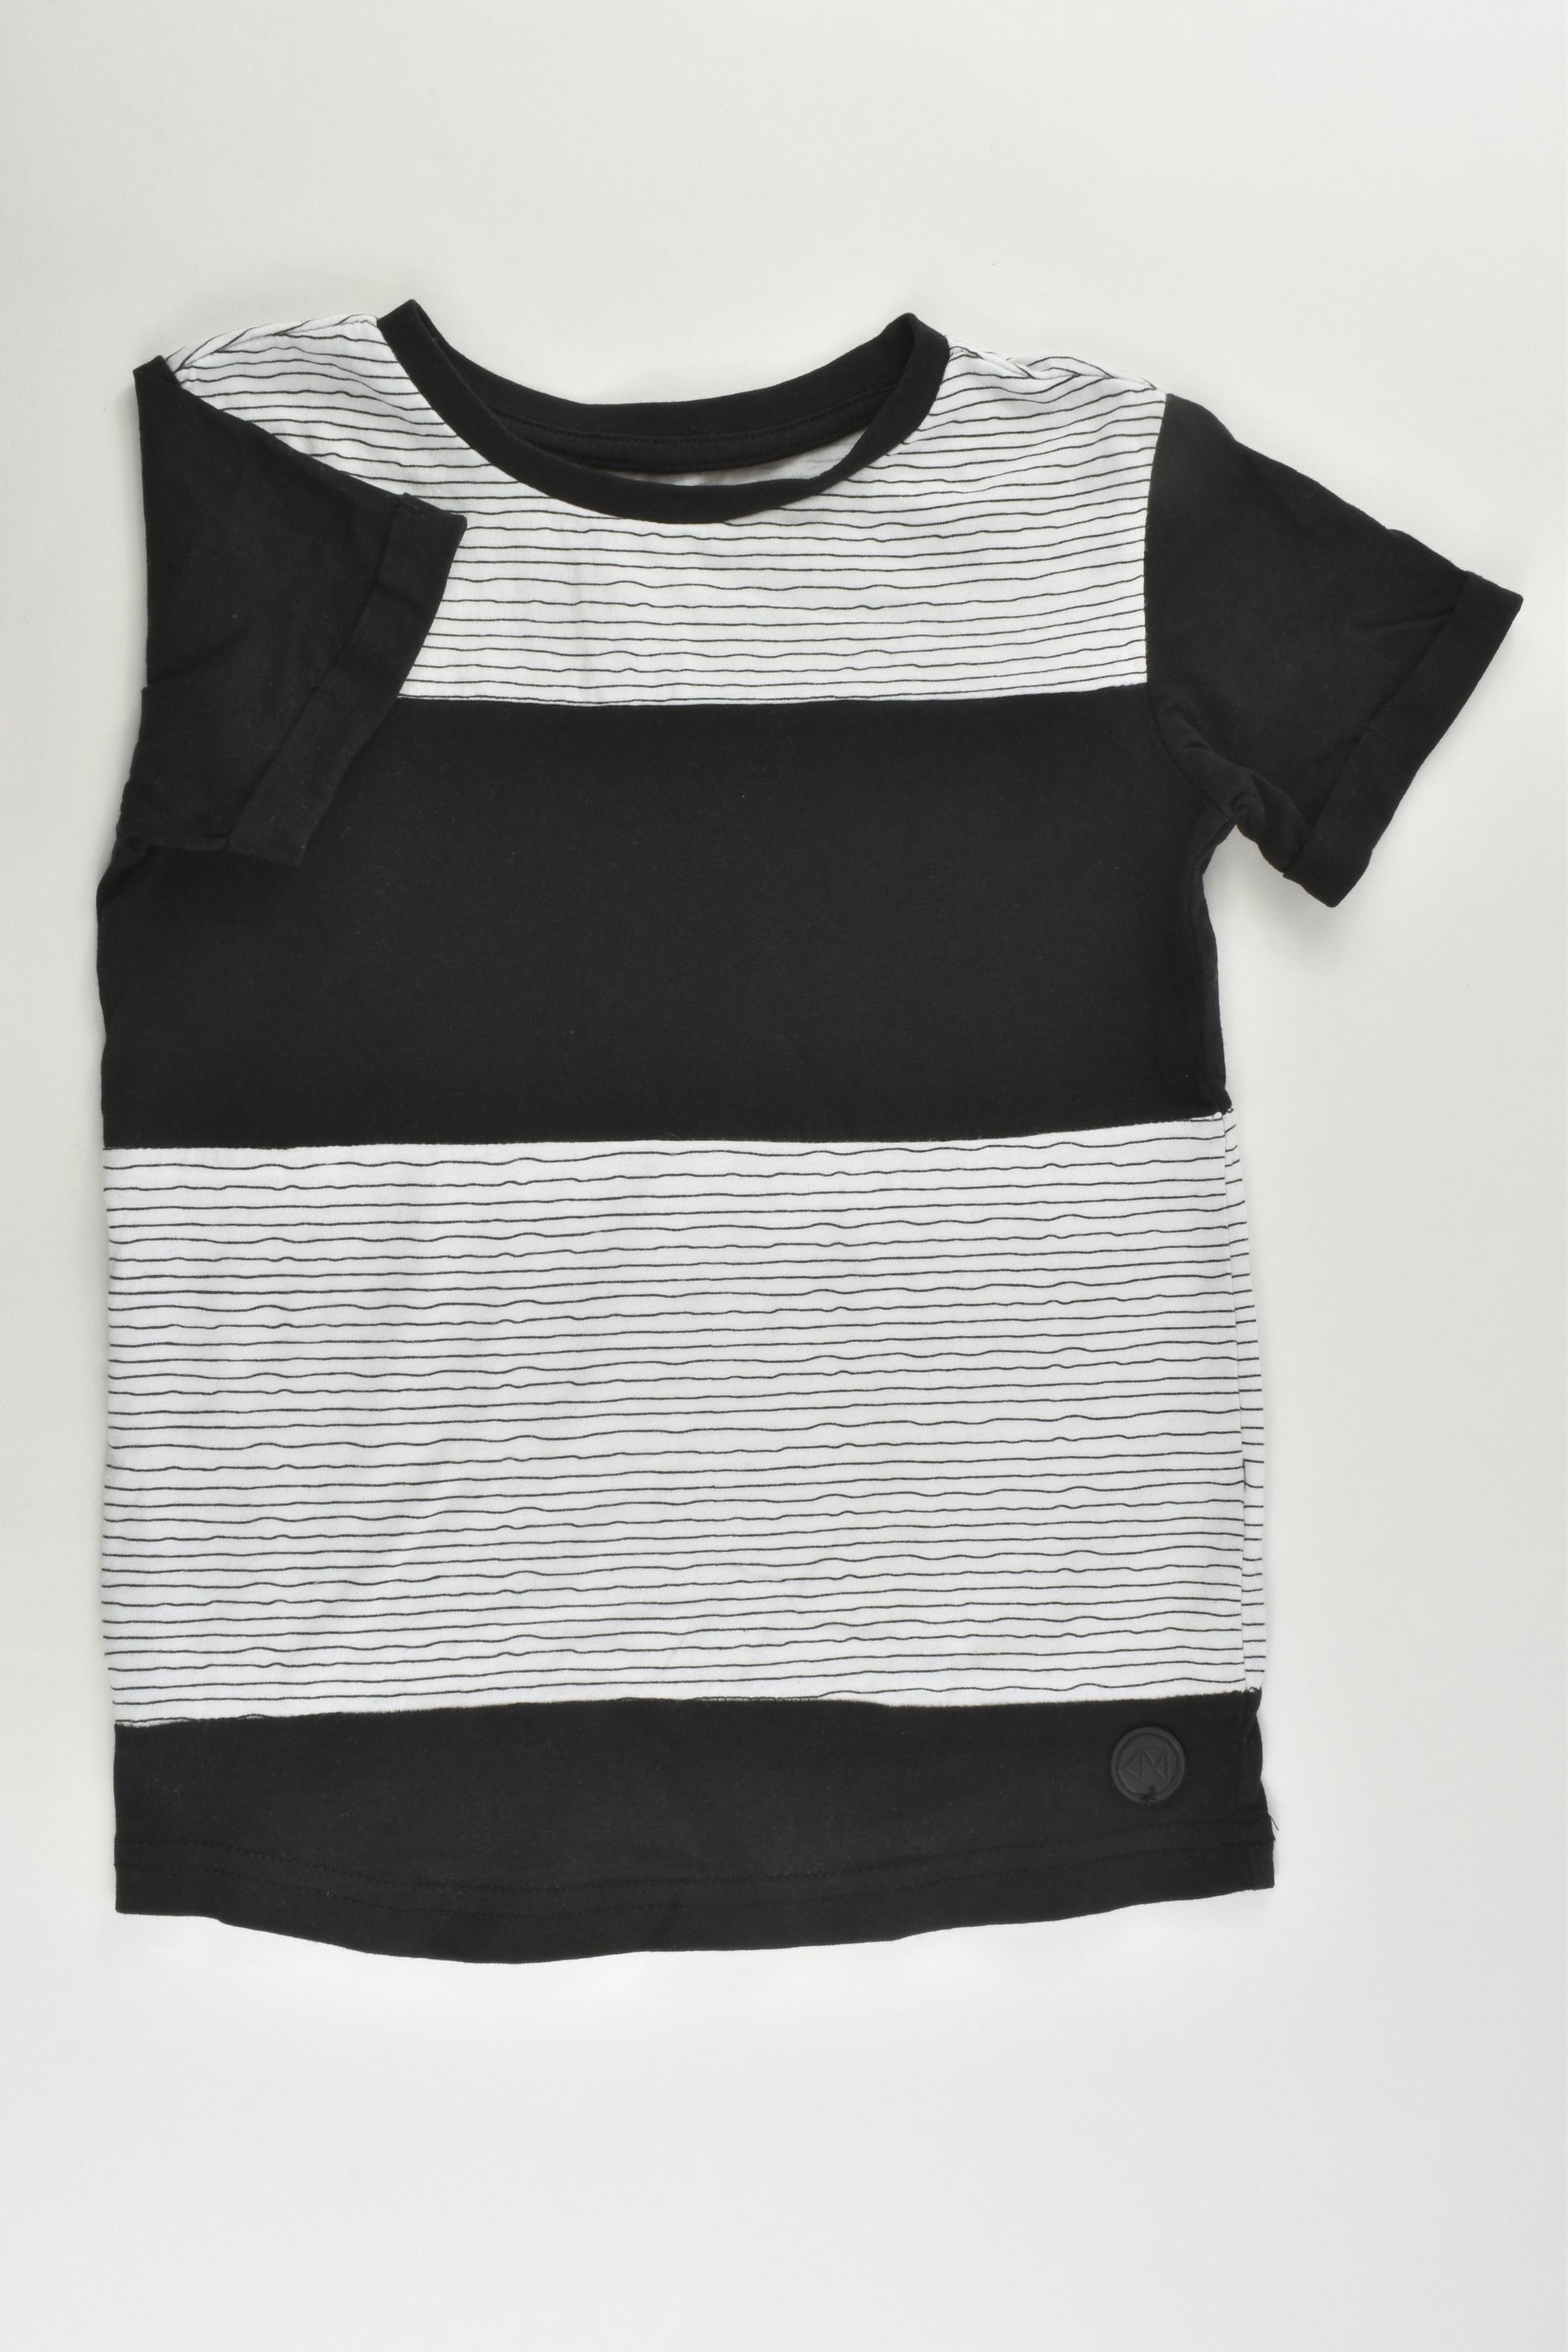 Anko Size 3 Black and White T-shirt